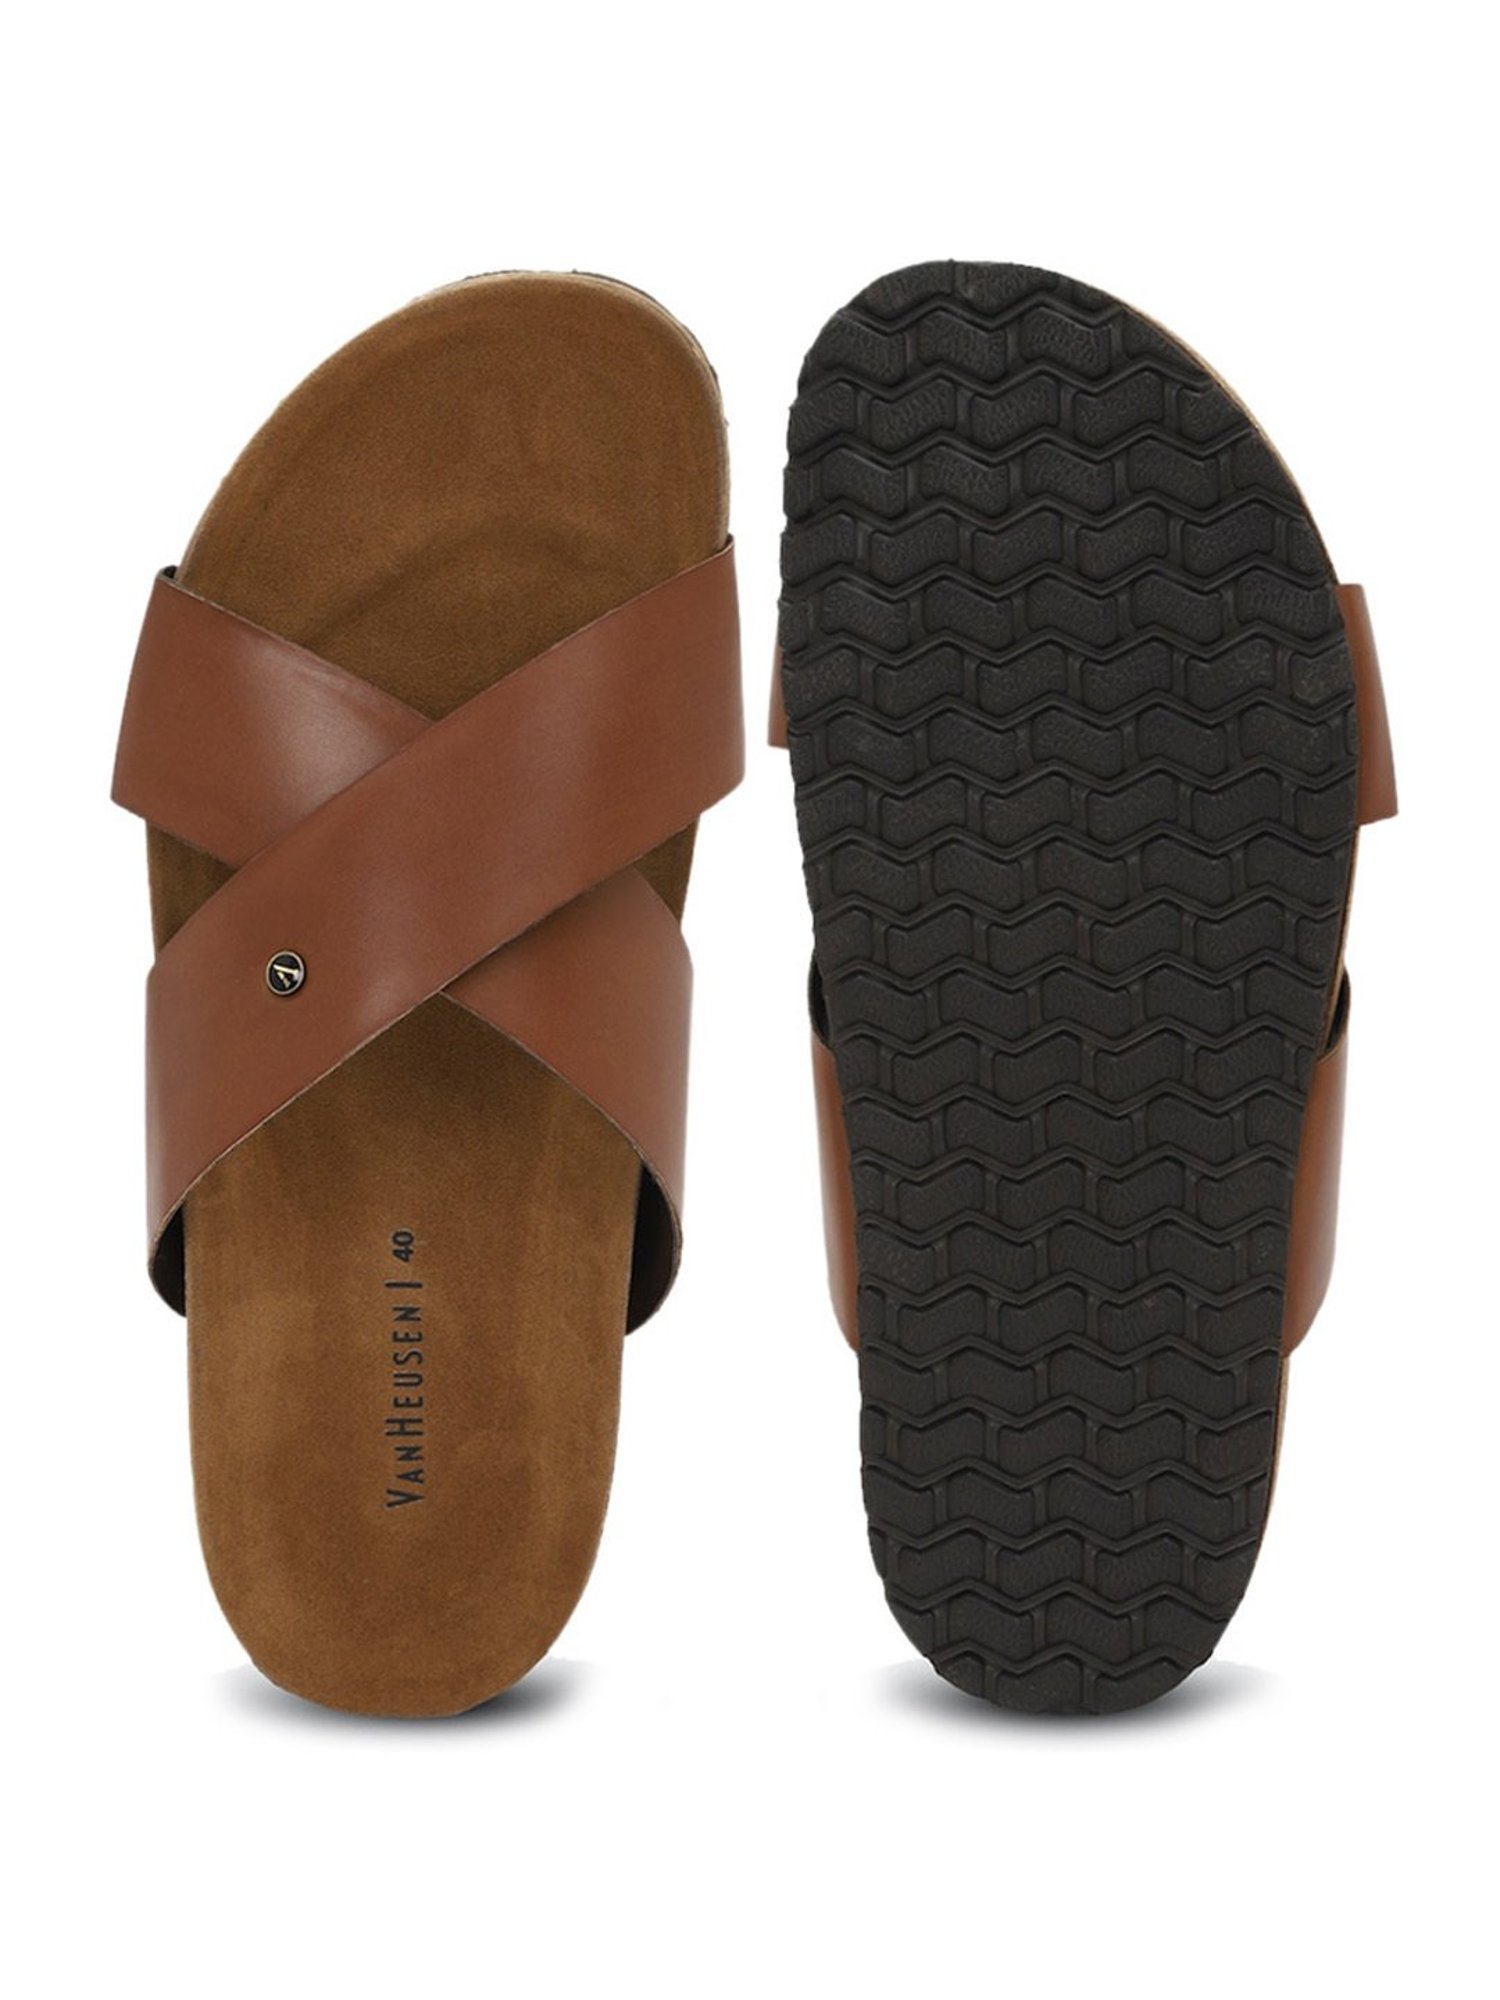 Brutus Black Sandals for Men - Fall/Winter collection - Camper USA